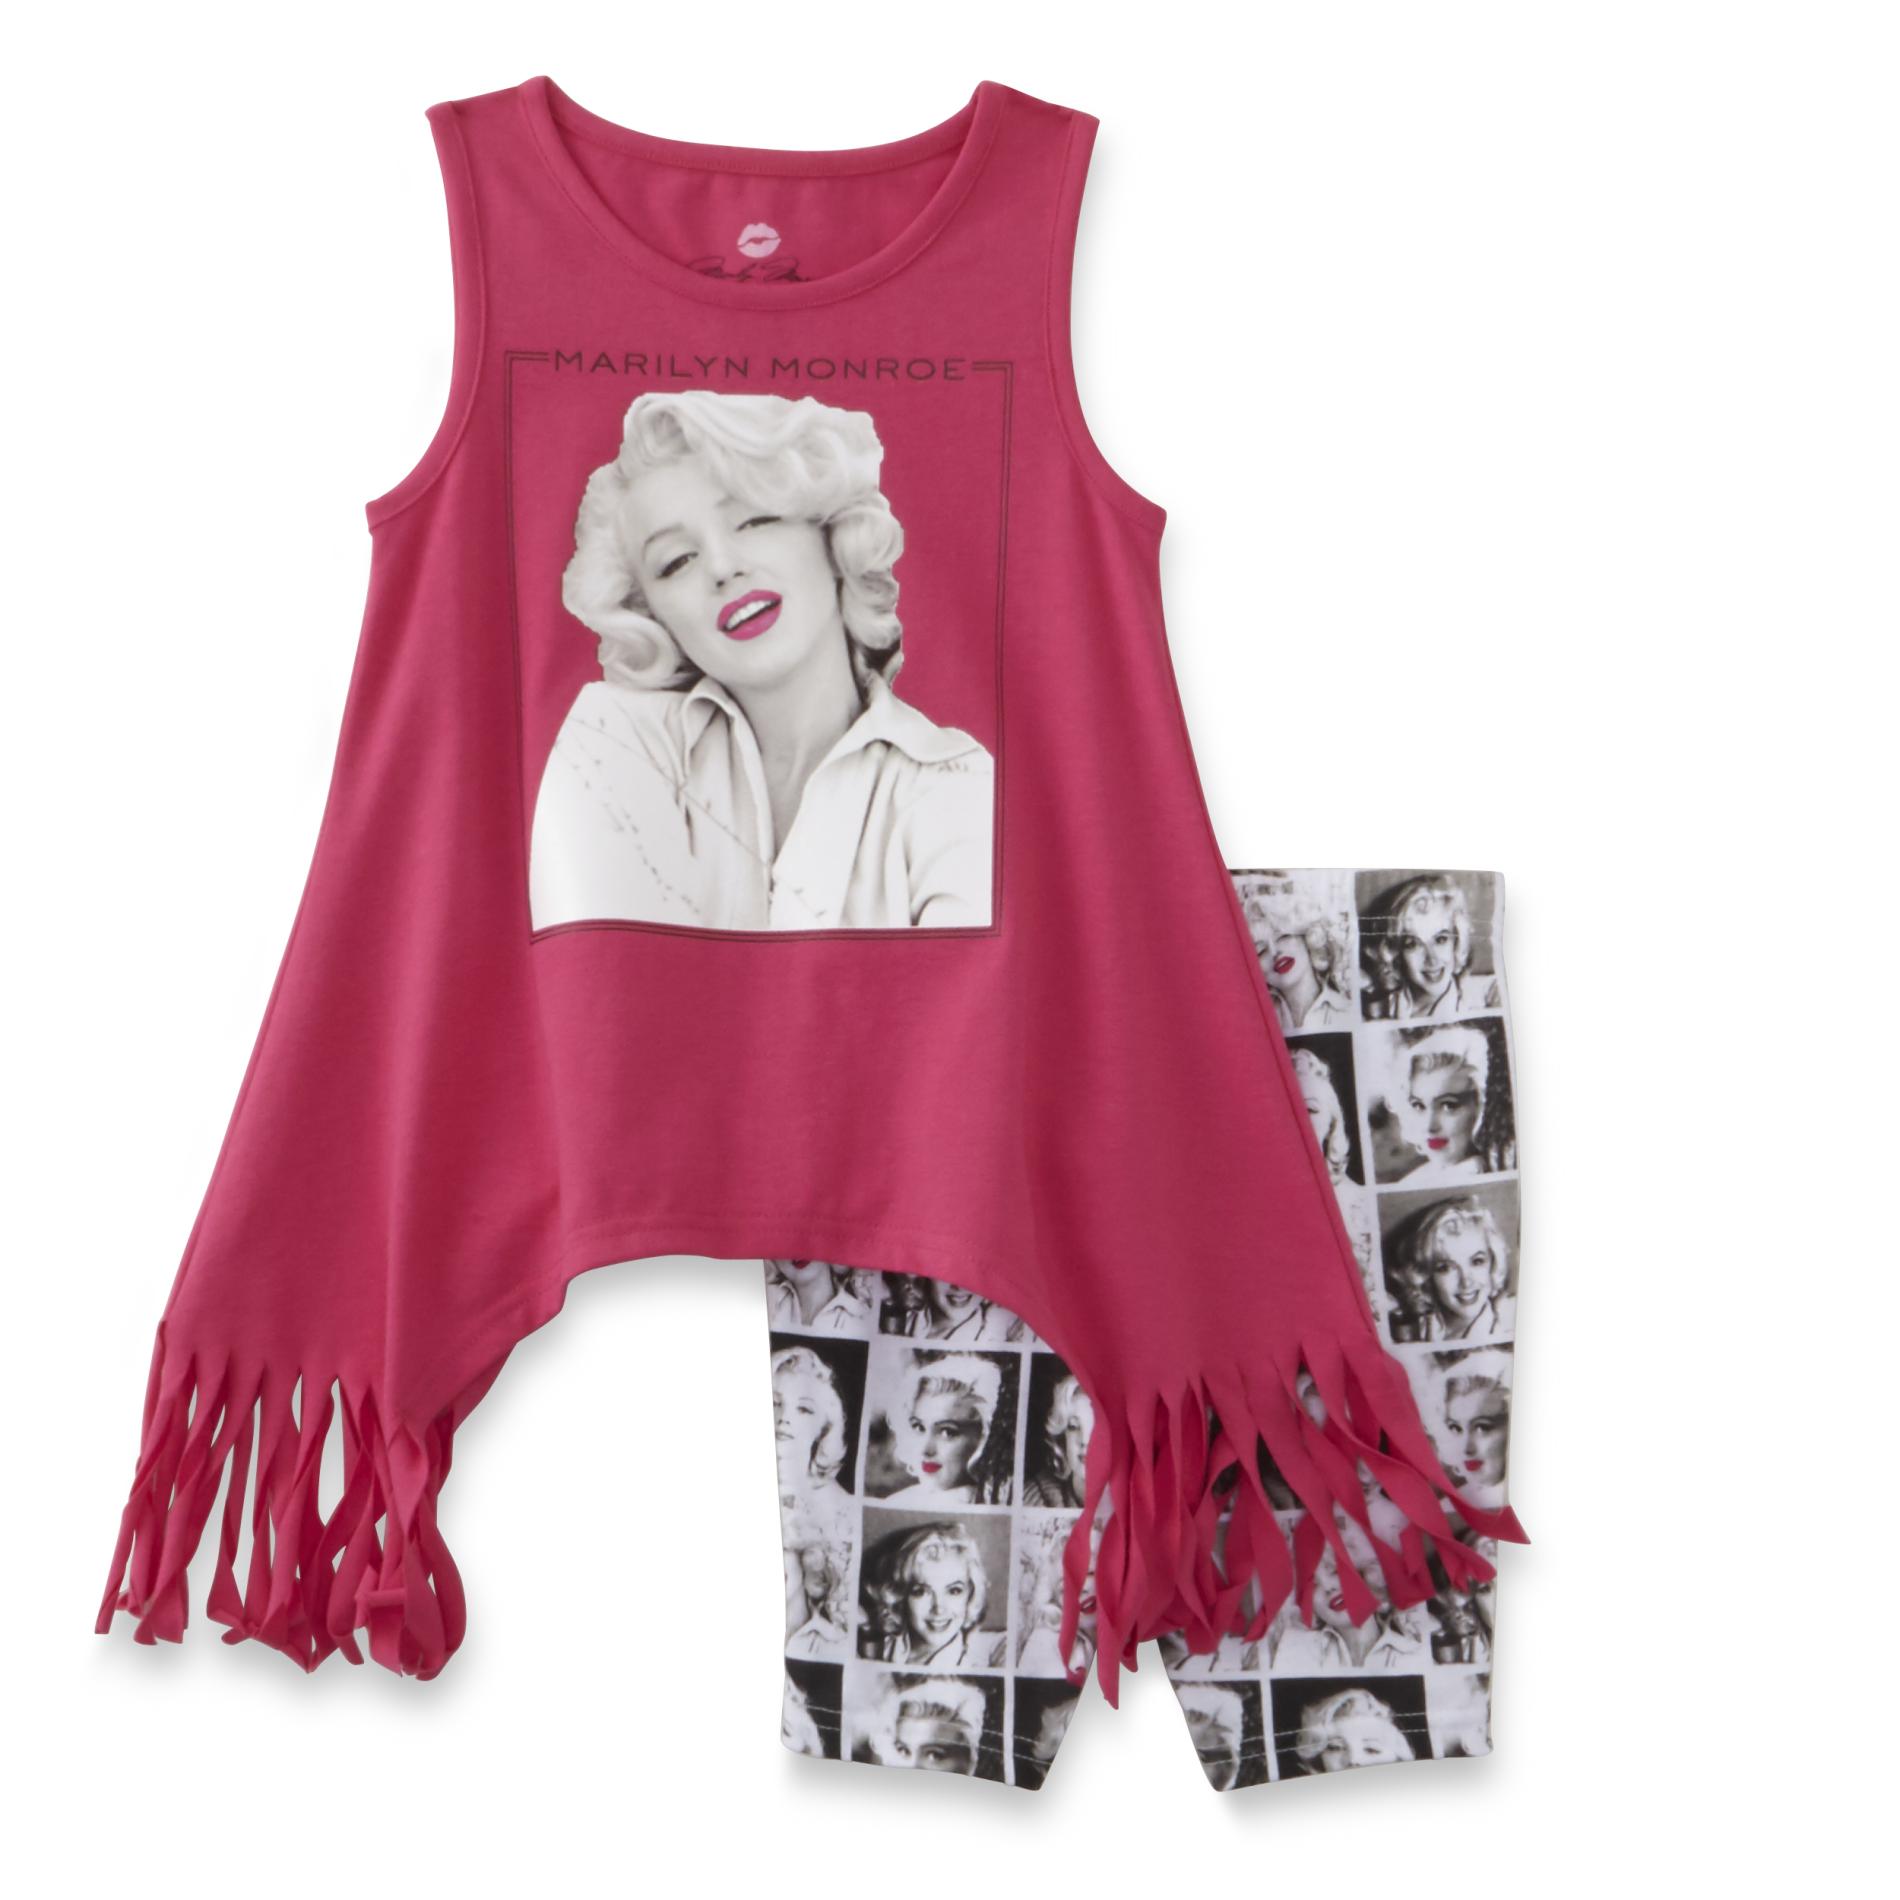 Marilyn Monroe&trade; Girl's Fringed Tank Top & Shorts